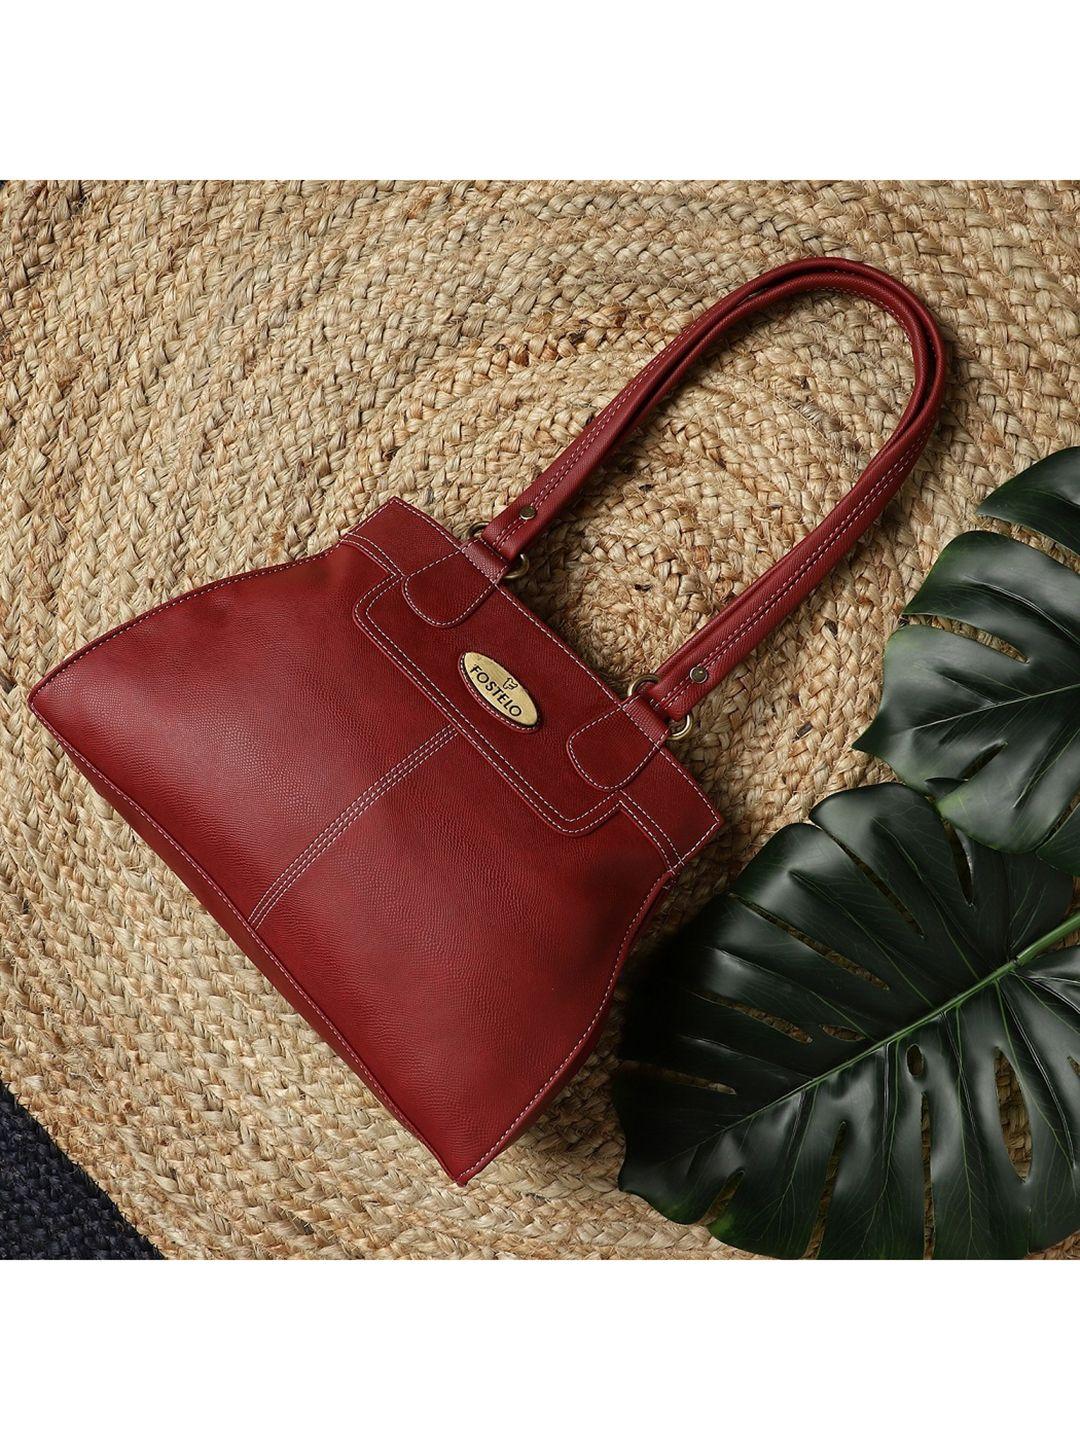 fostelo maroon pu structured handheld bag